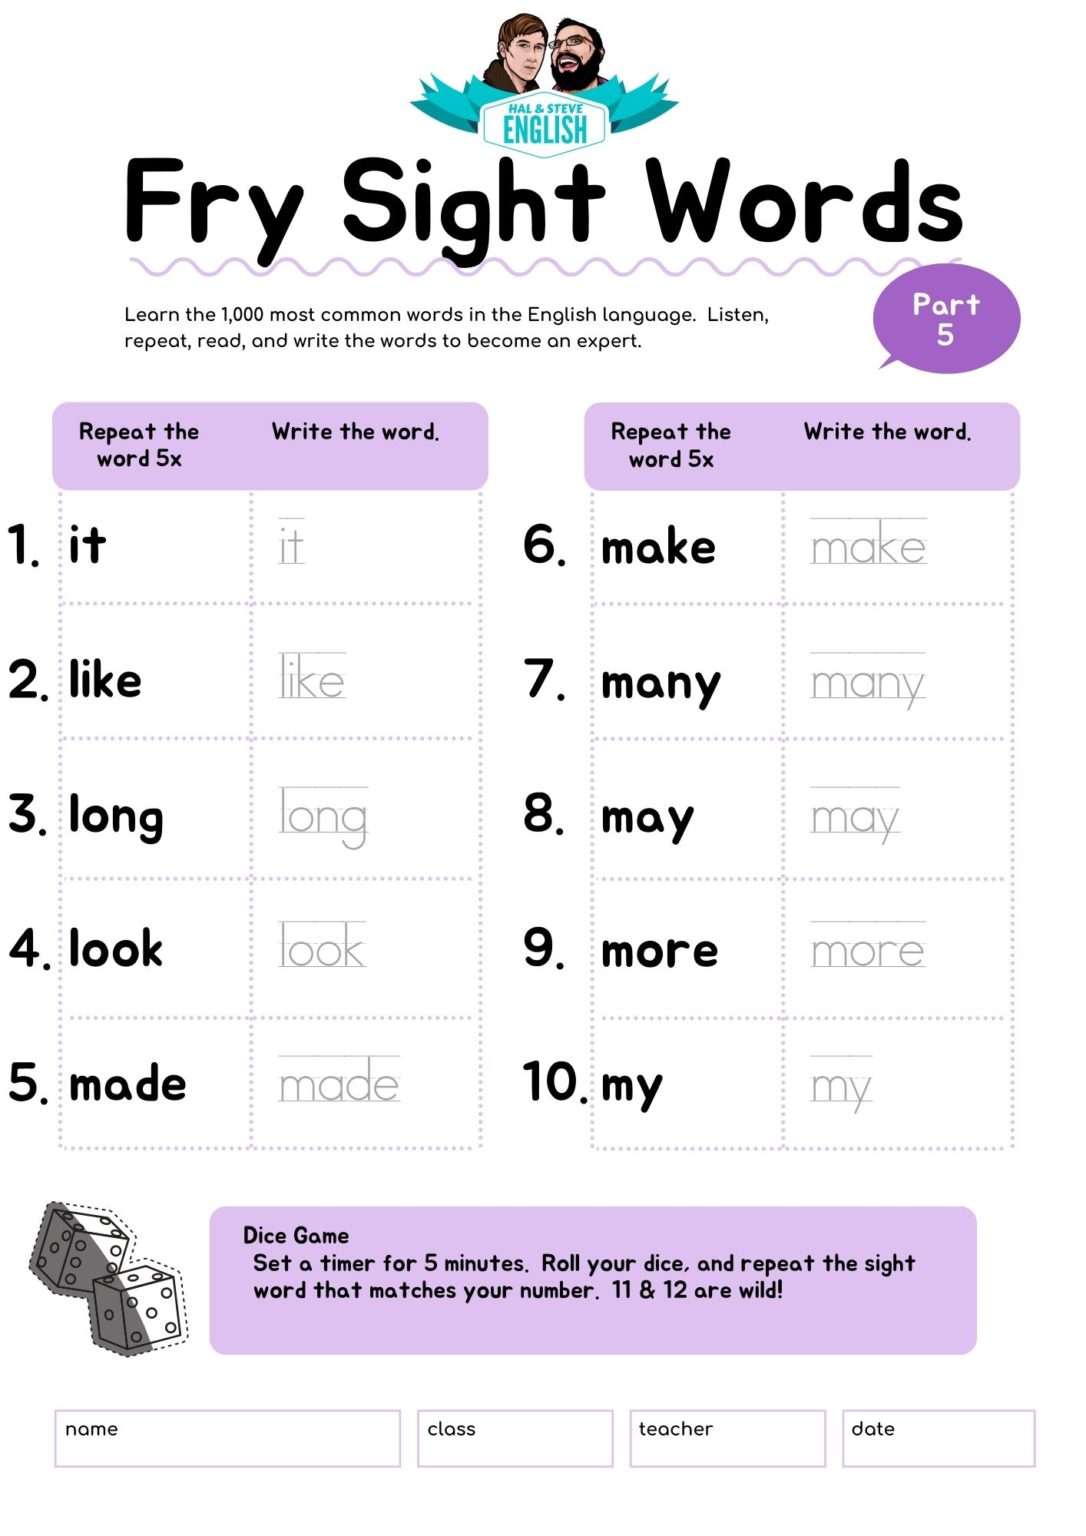 fry sight words homework